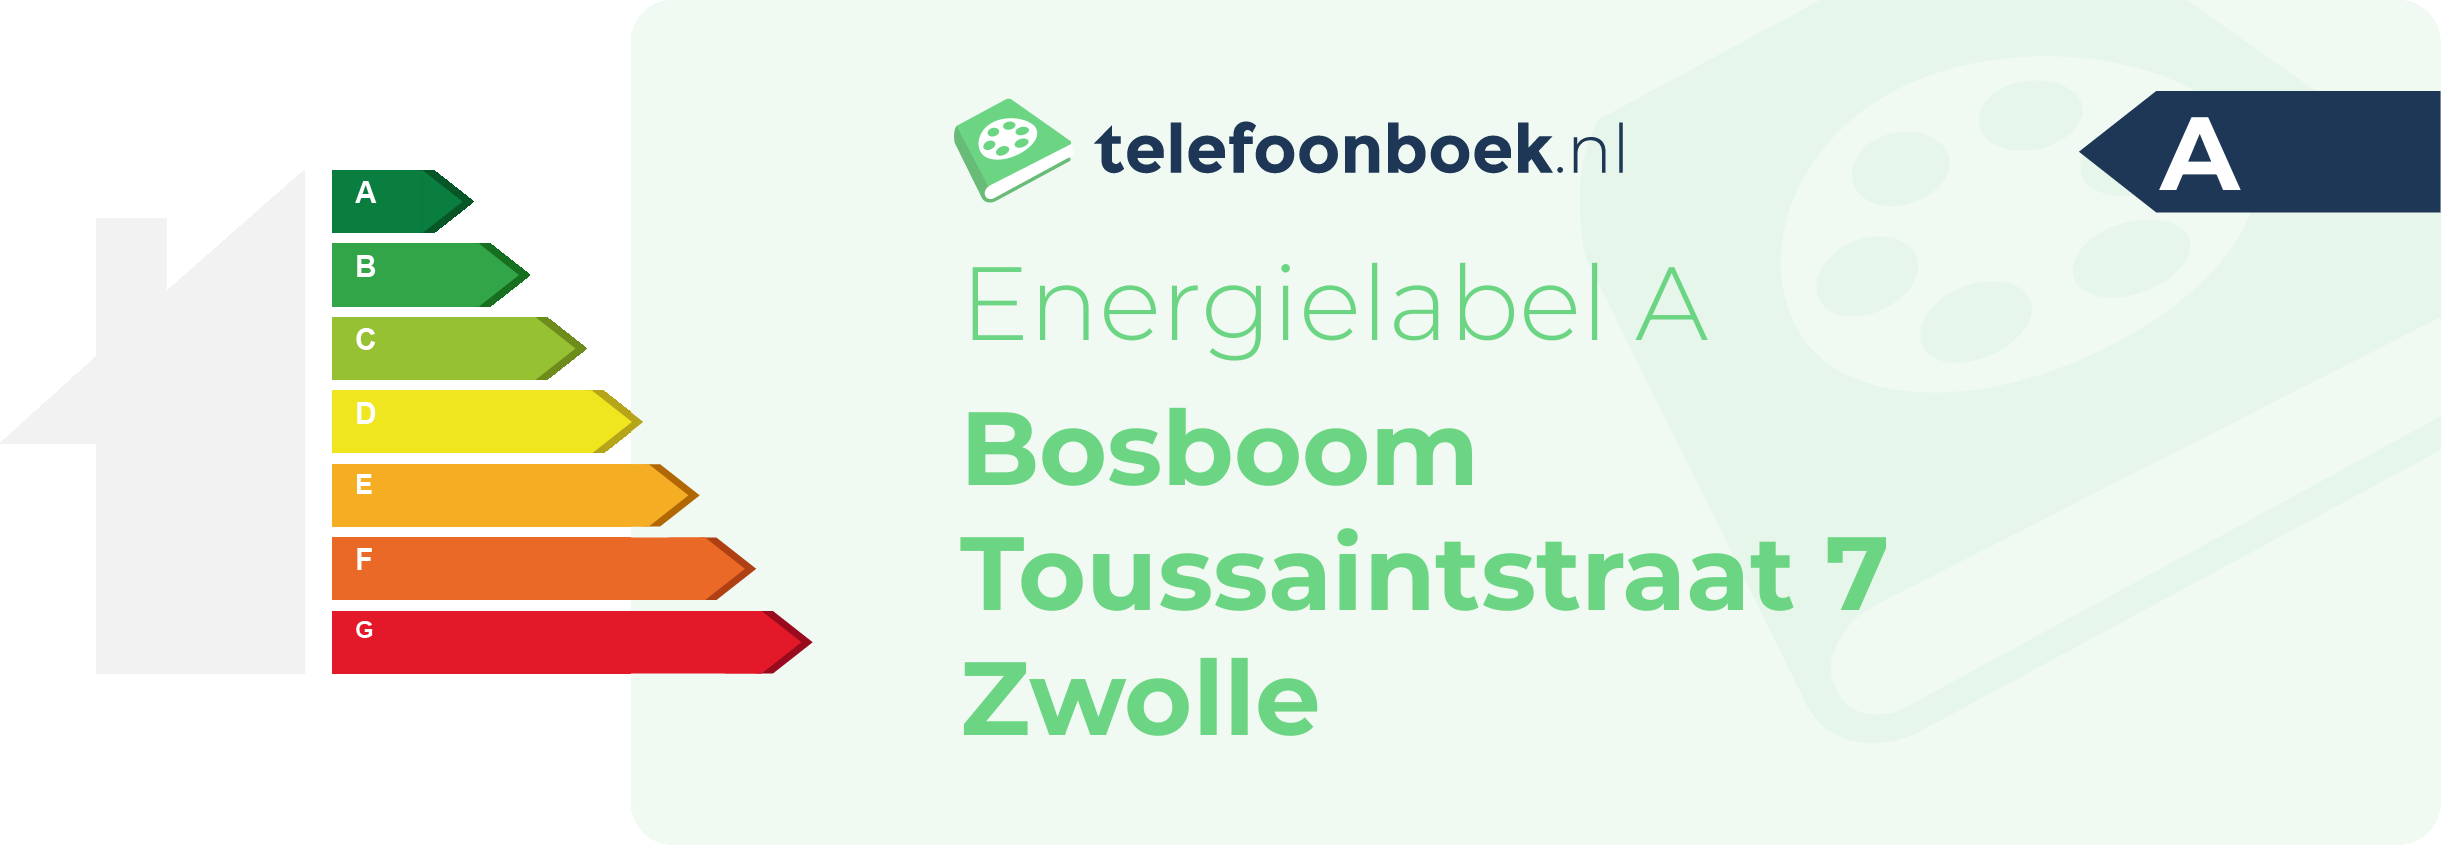 Energielabel Bosboom Toussaintstraat 7 Zwolle